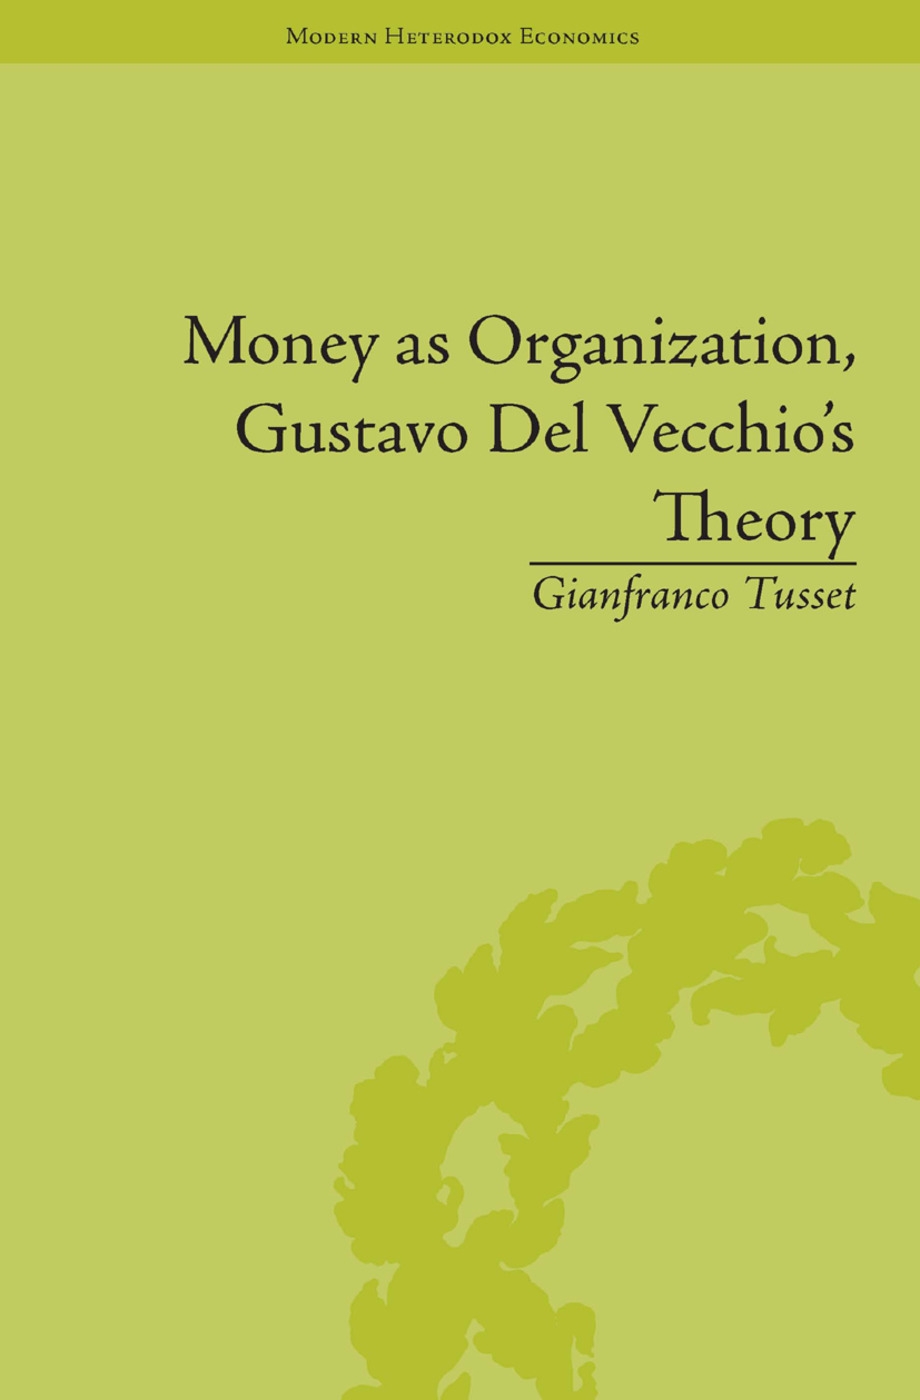 Money as Organization, Gustavo del Vecchio’s Theory